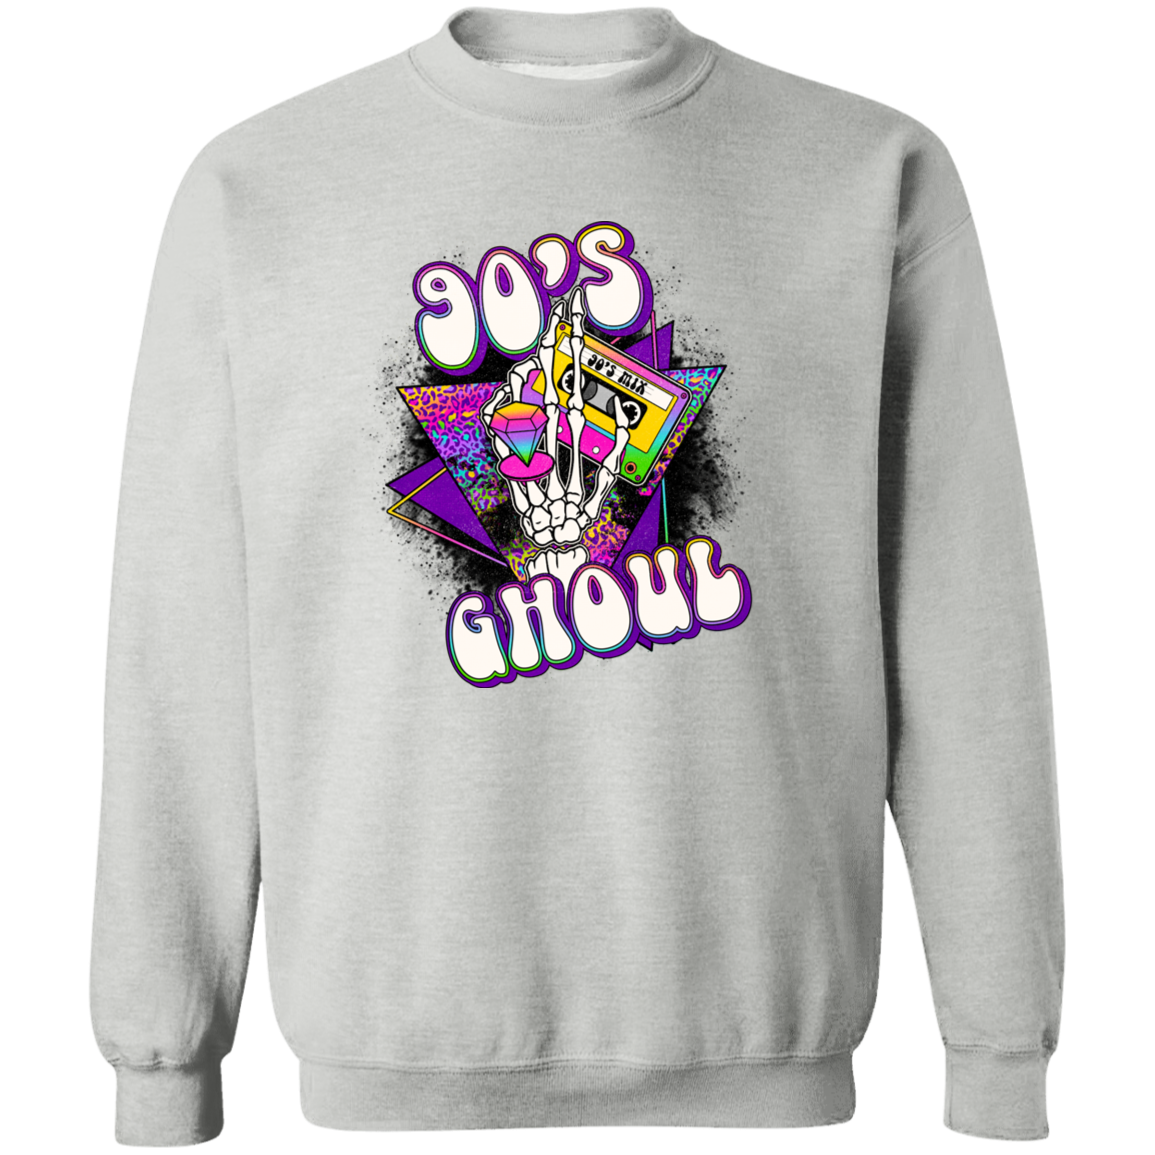 90's Ghoul Shirt